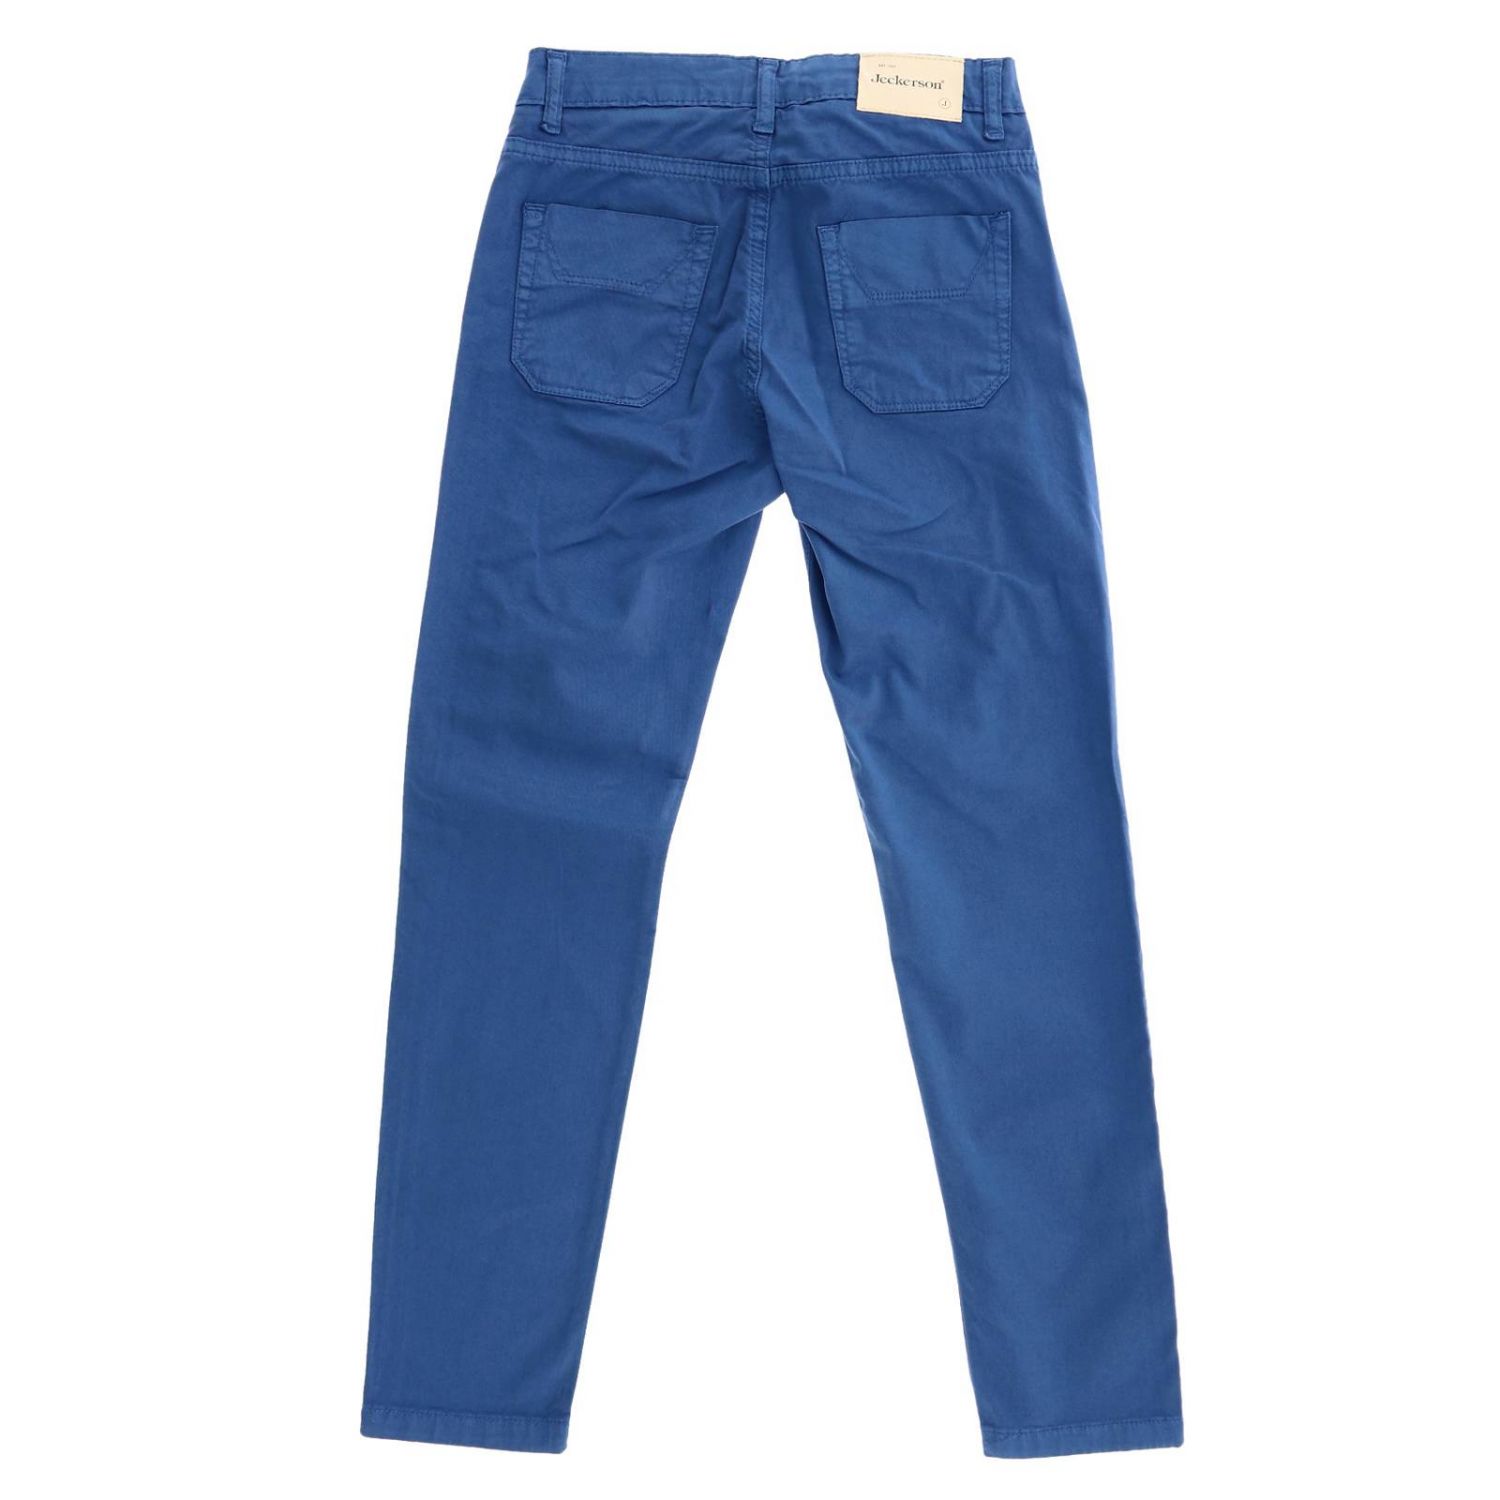 Jeckerson Outlet: Pants kids - Gnawed Blue | Pants Jeckerson J1023 ...